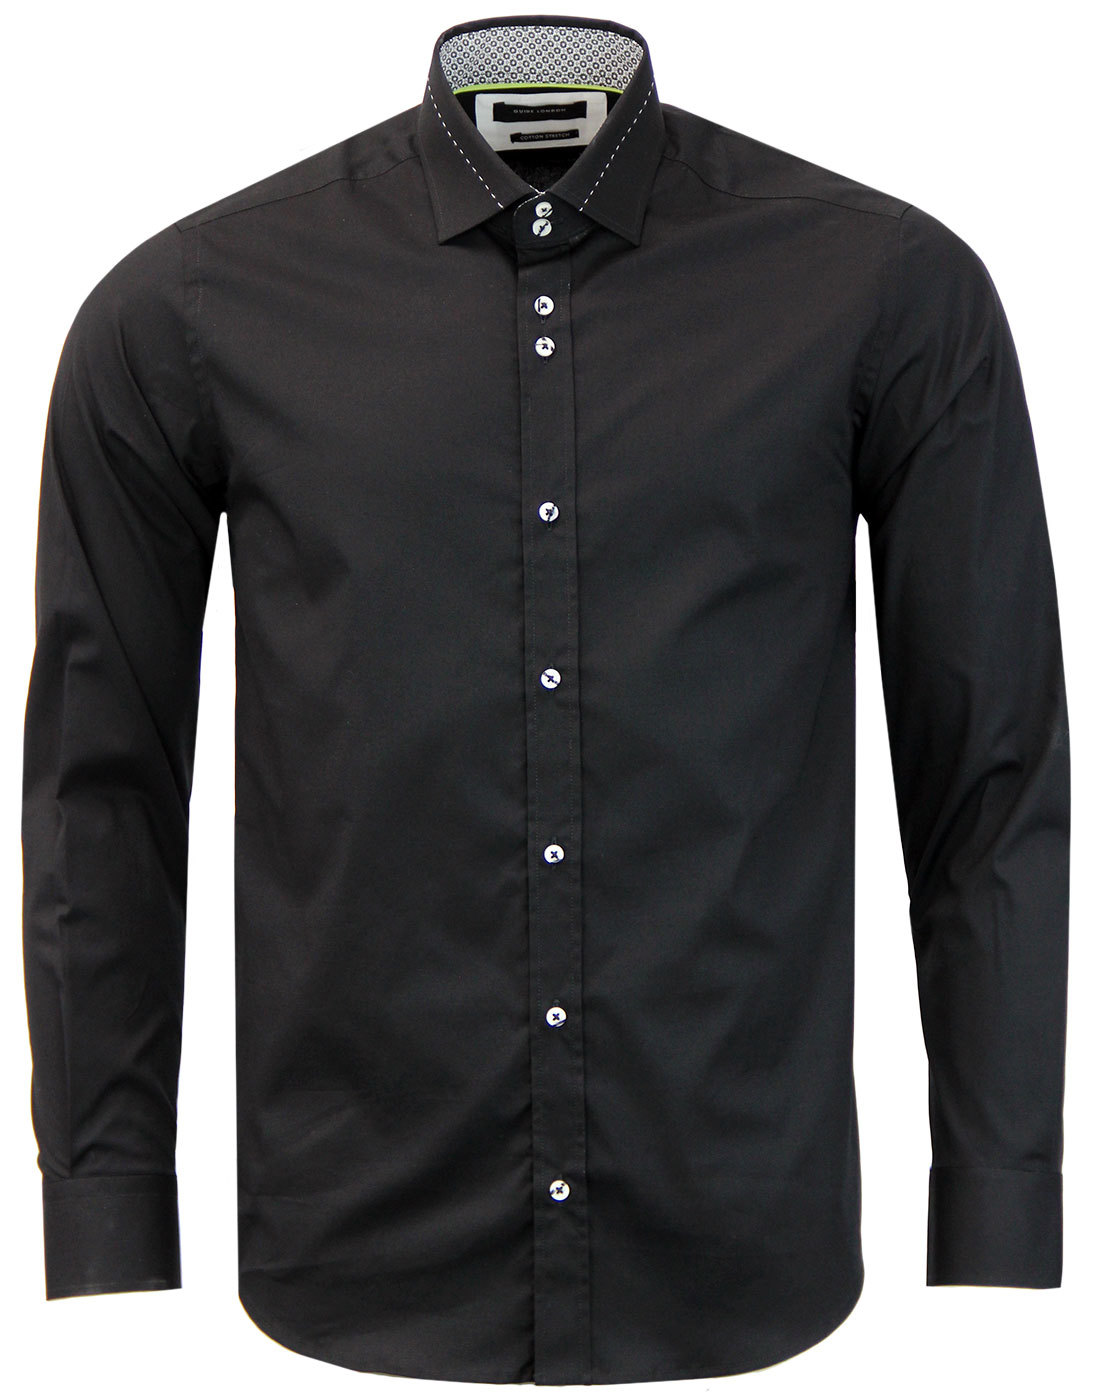 GUIDE LONDON Men's 1960s Mod Stitch Collar Smart Shirt in Black